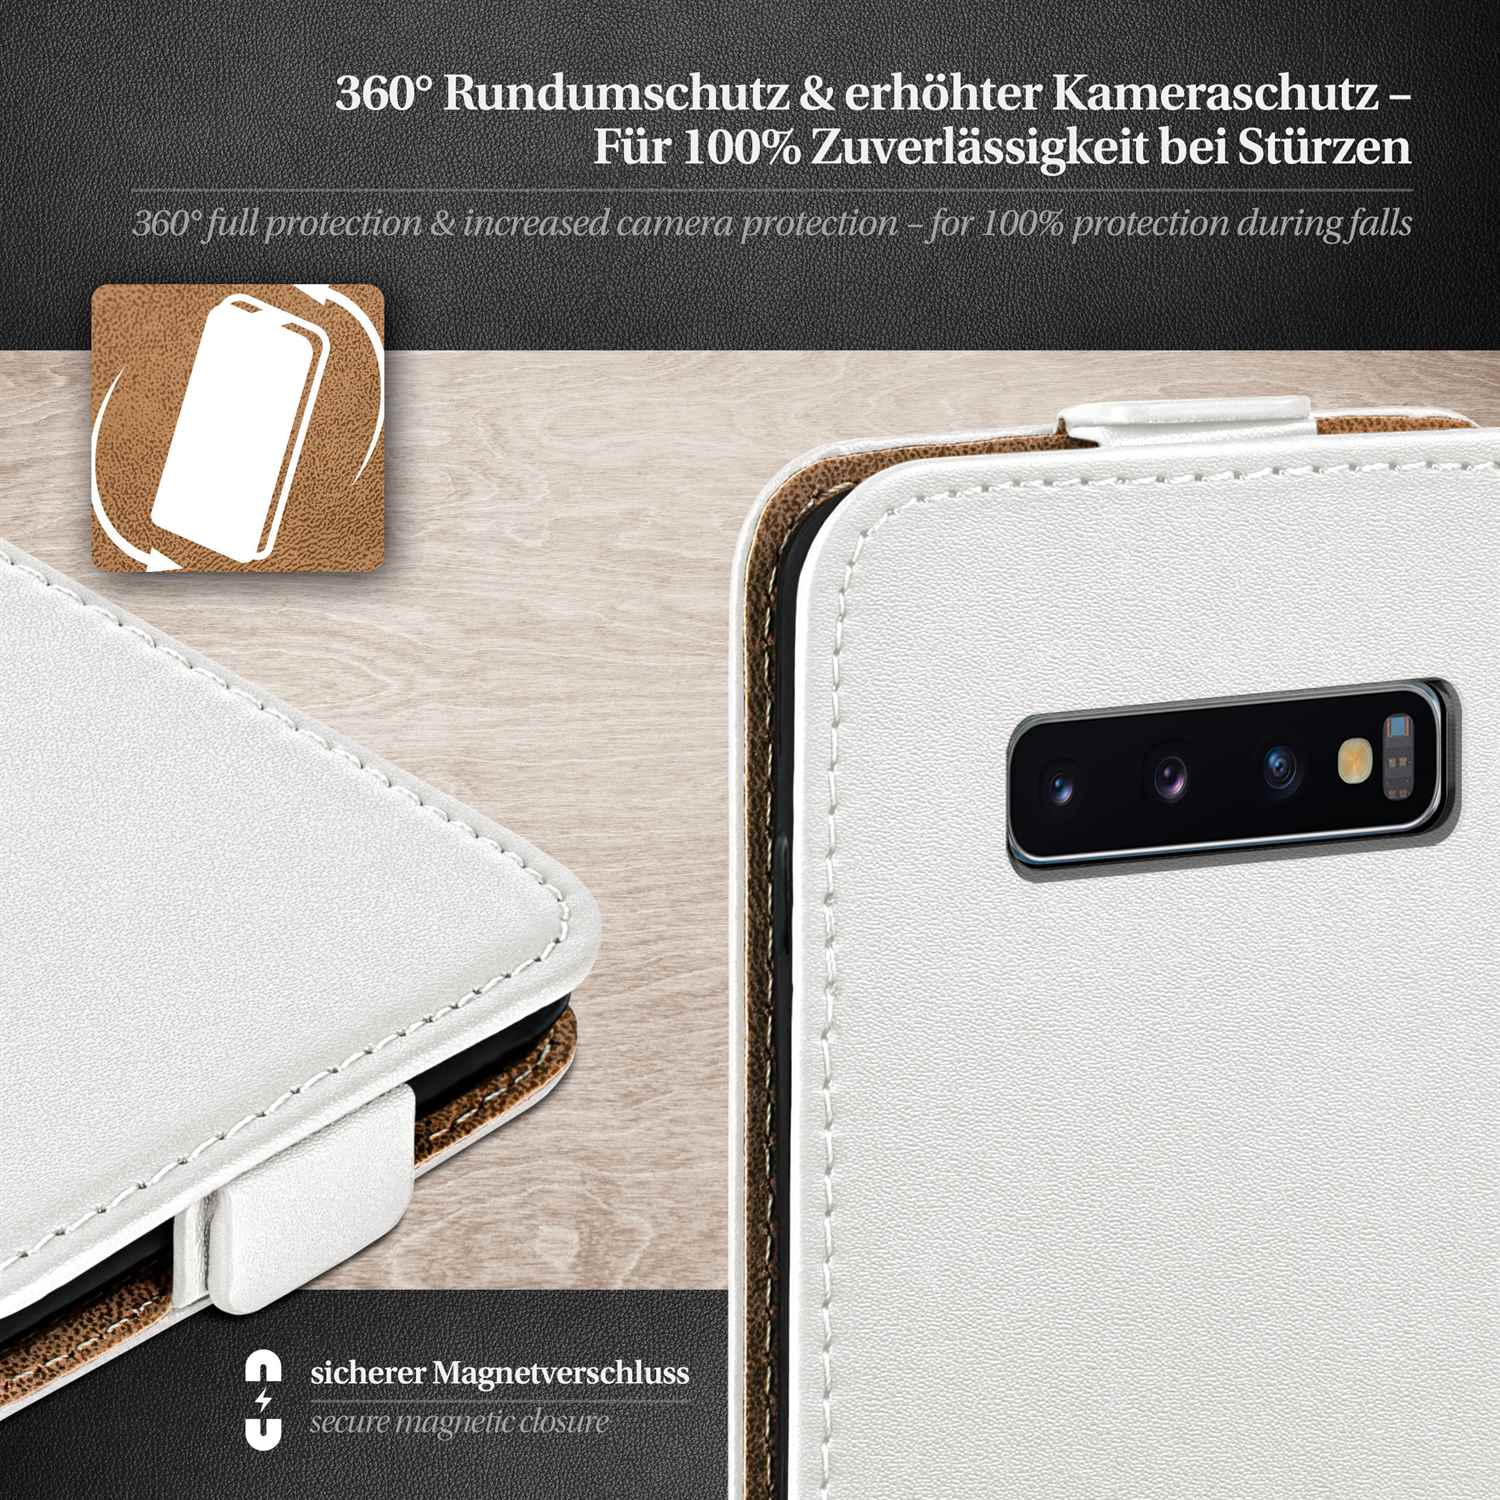 Pearl-White S10 Cover, Flip MOEX Plus, Samsung, Case, Flip Galaxy